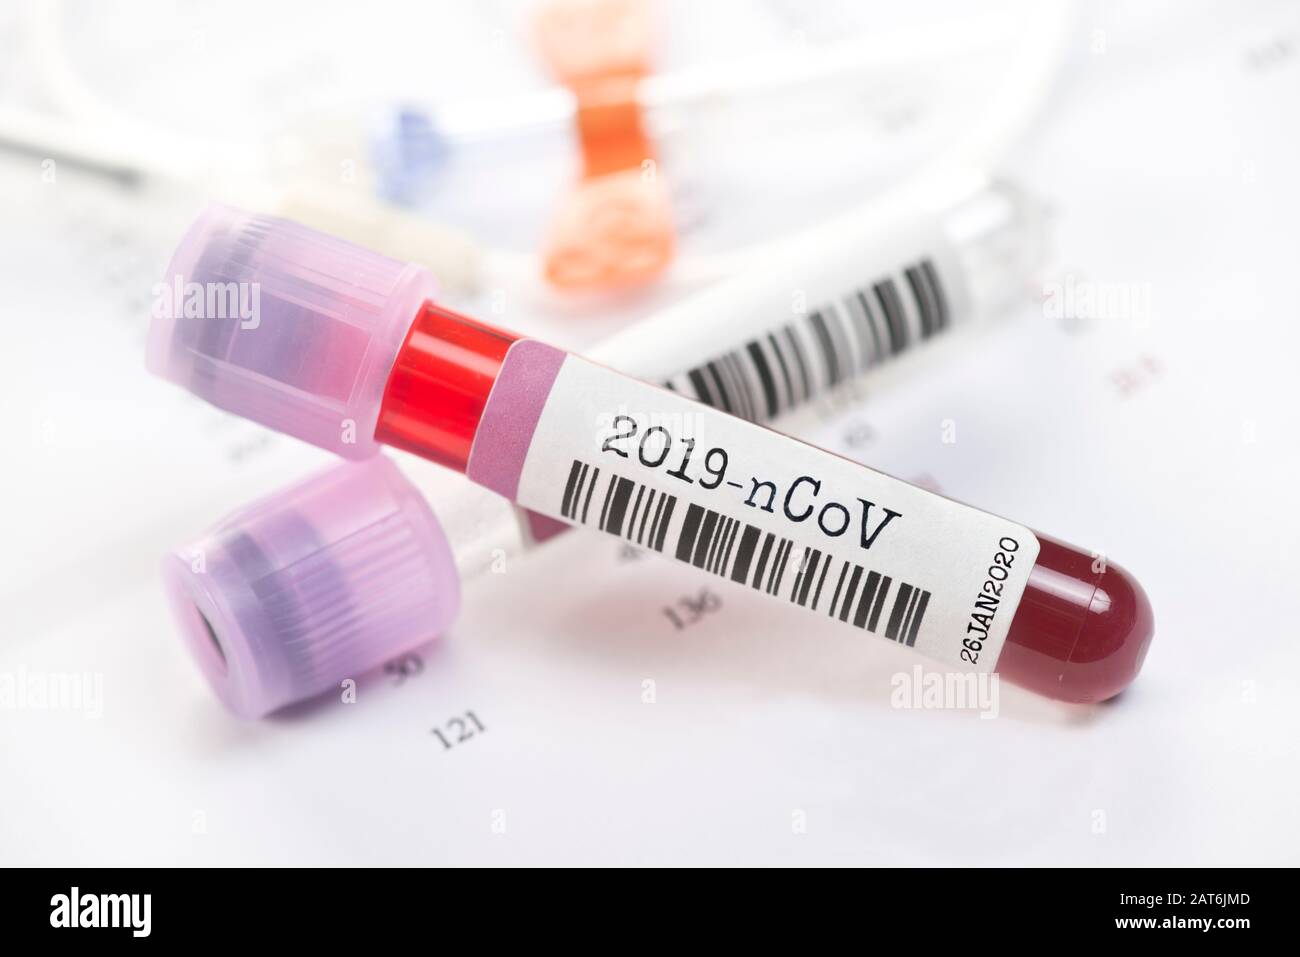 2019-nCoV novel coronavirus blood test tubes with catheter. Stock Photo